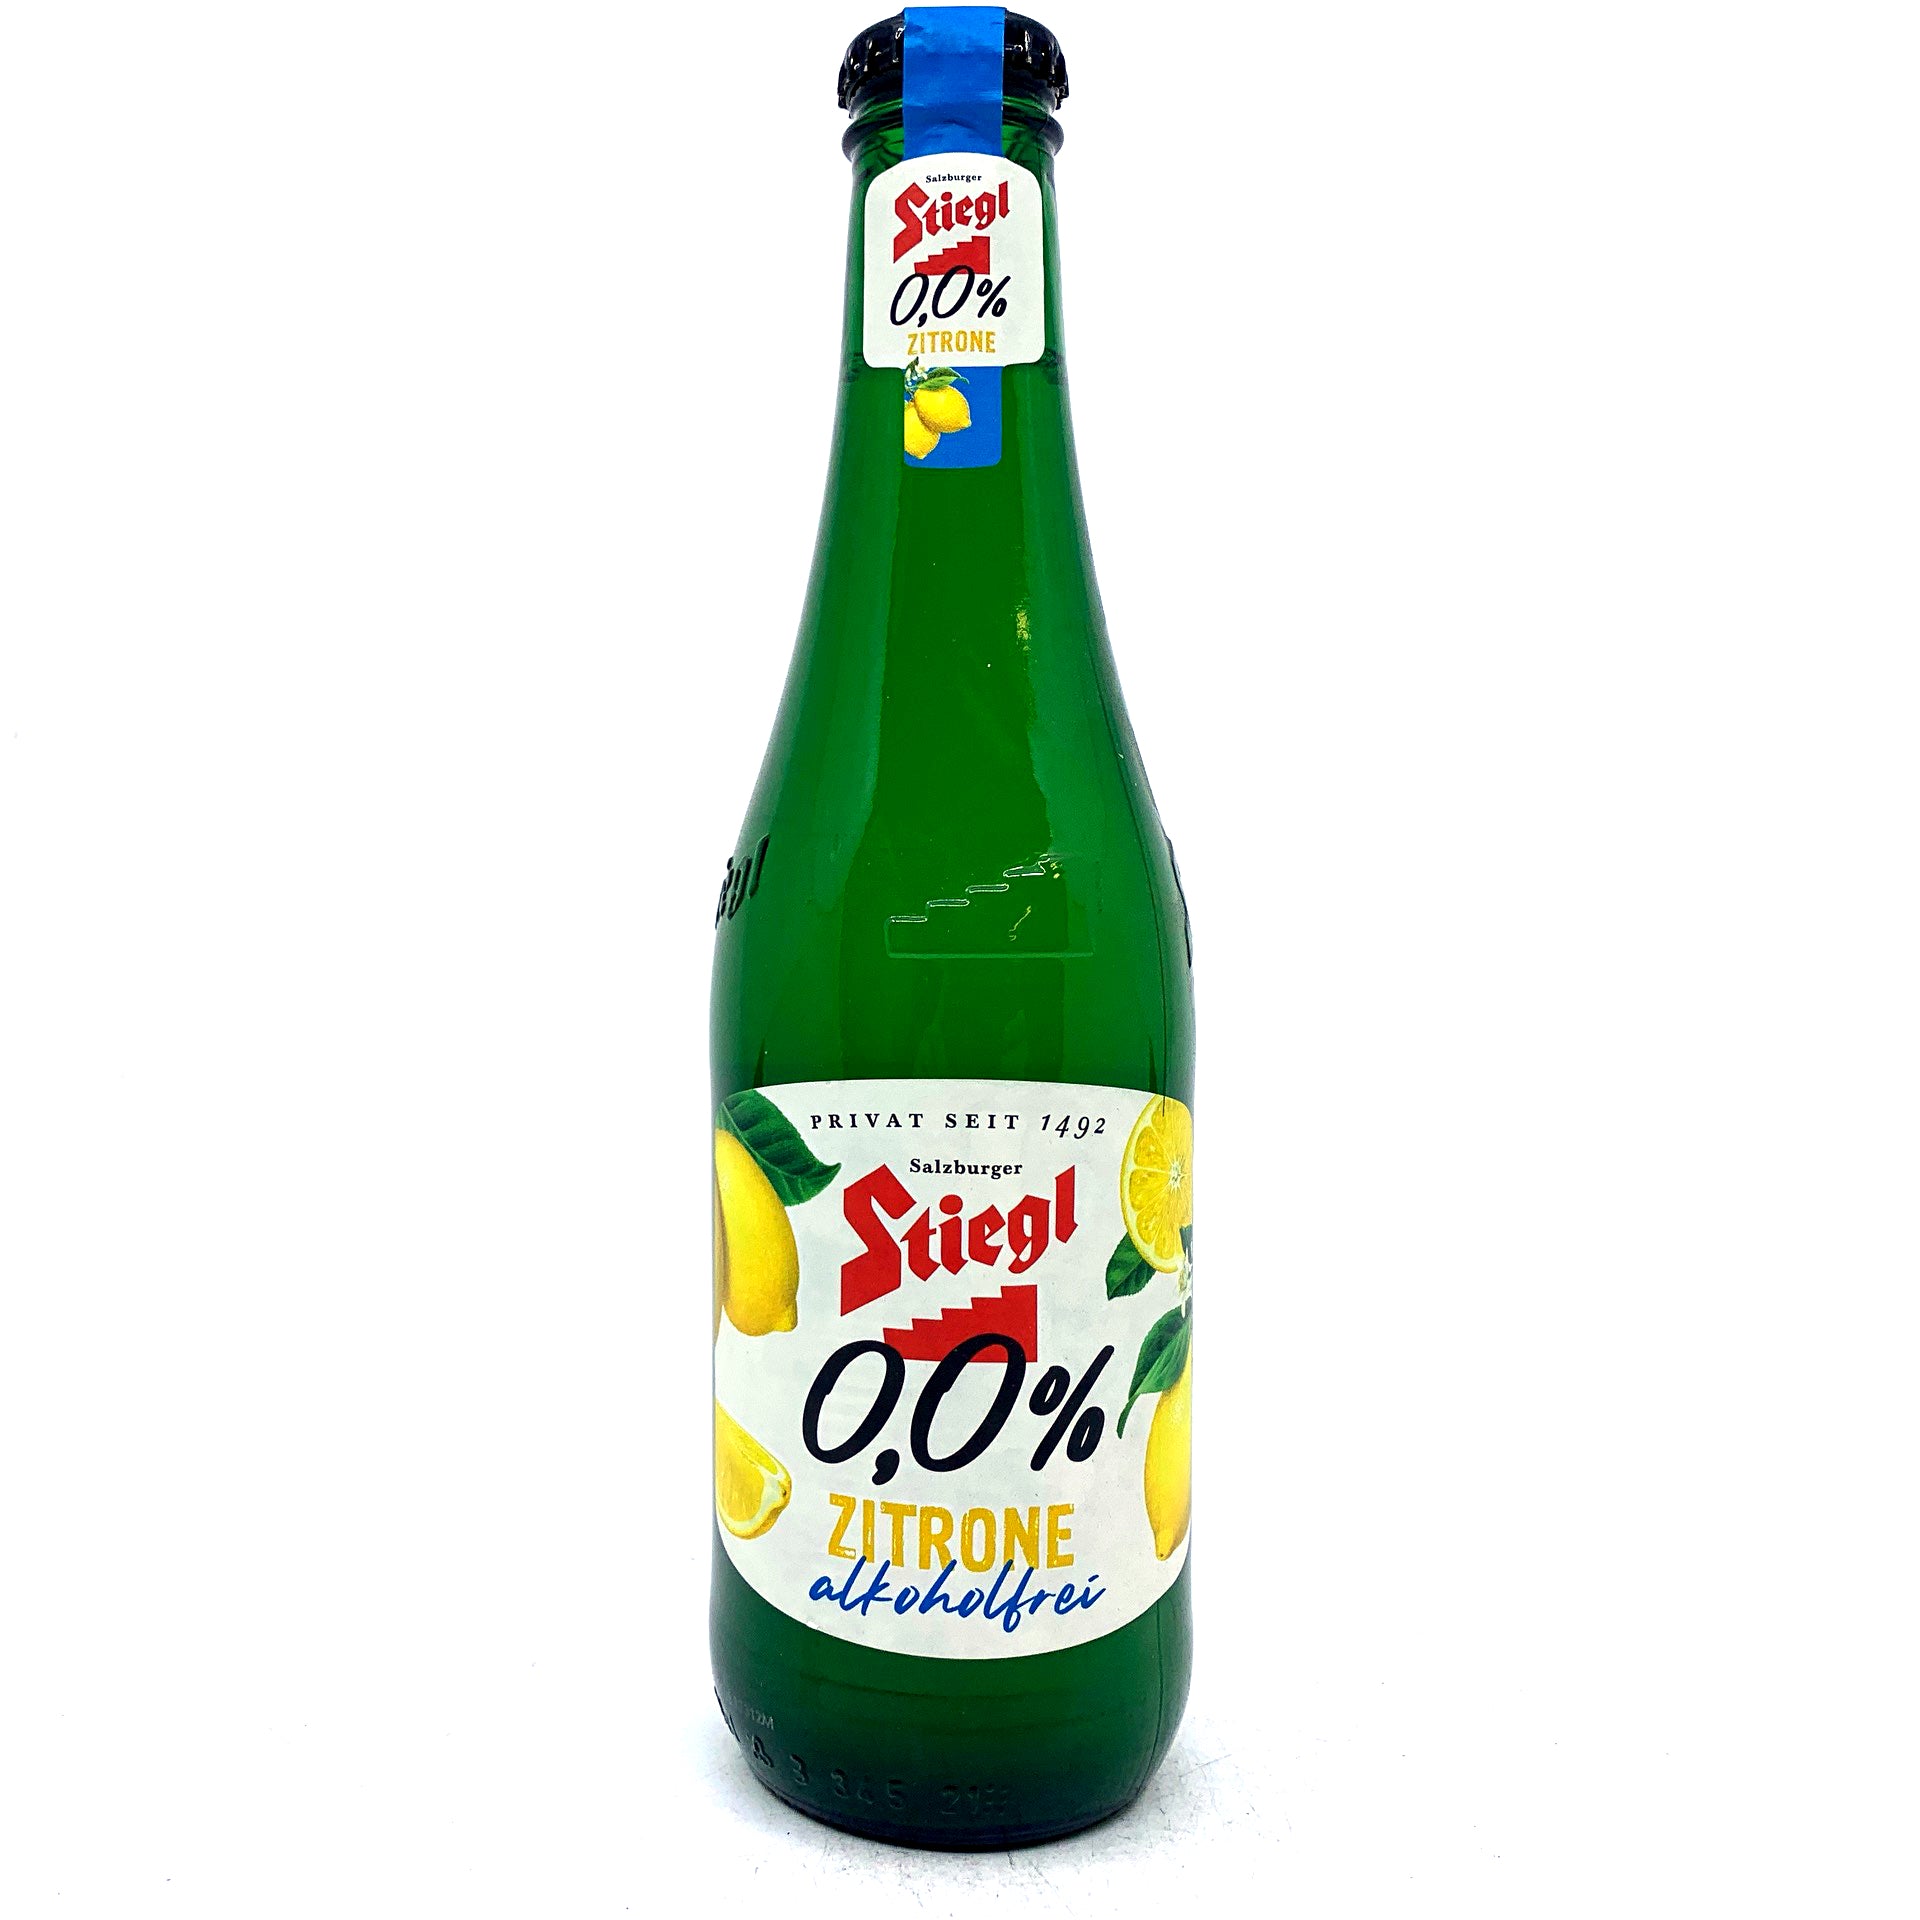 Stiegl Zitrone Alcohol Free Lemon Beer 0.0% (330ml)-Hop Burns & Black